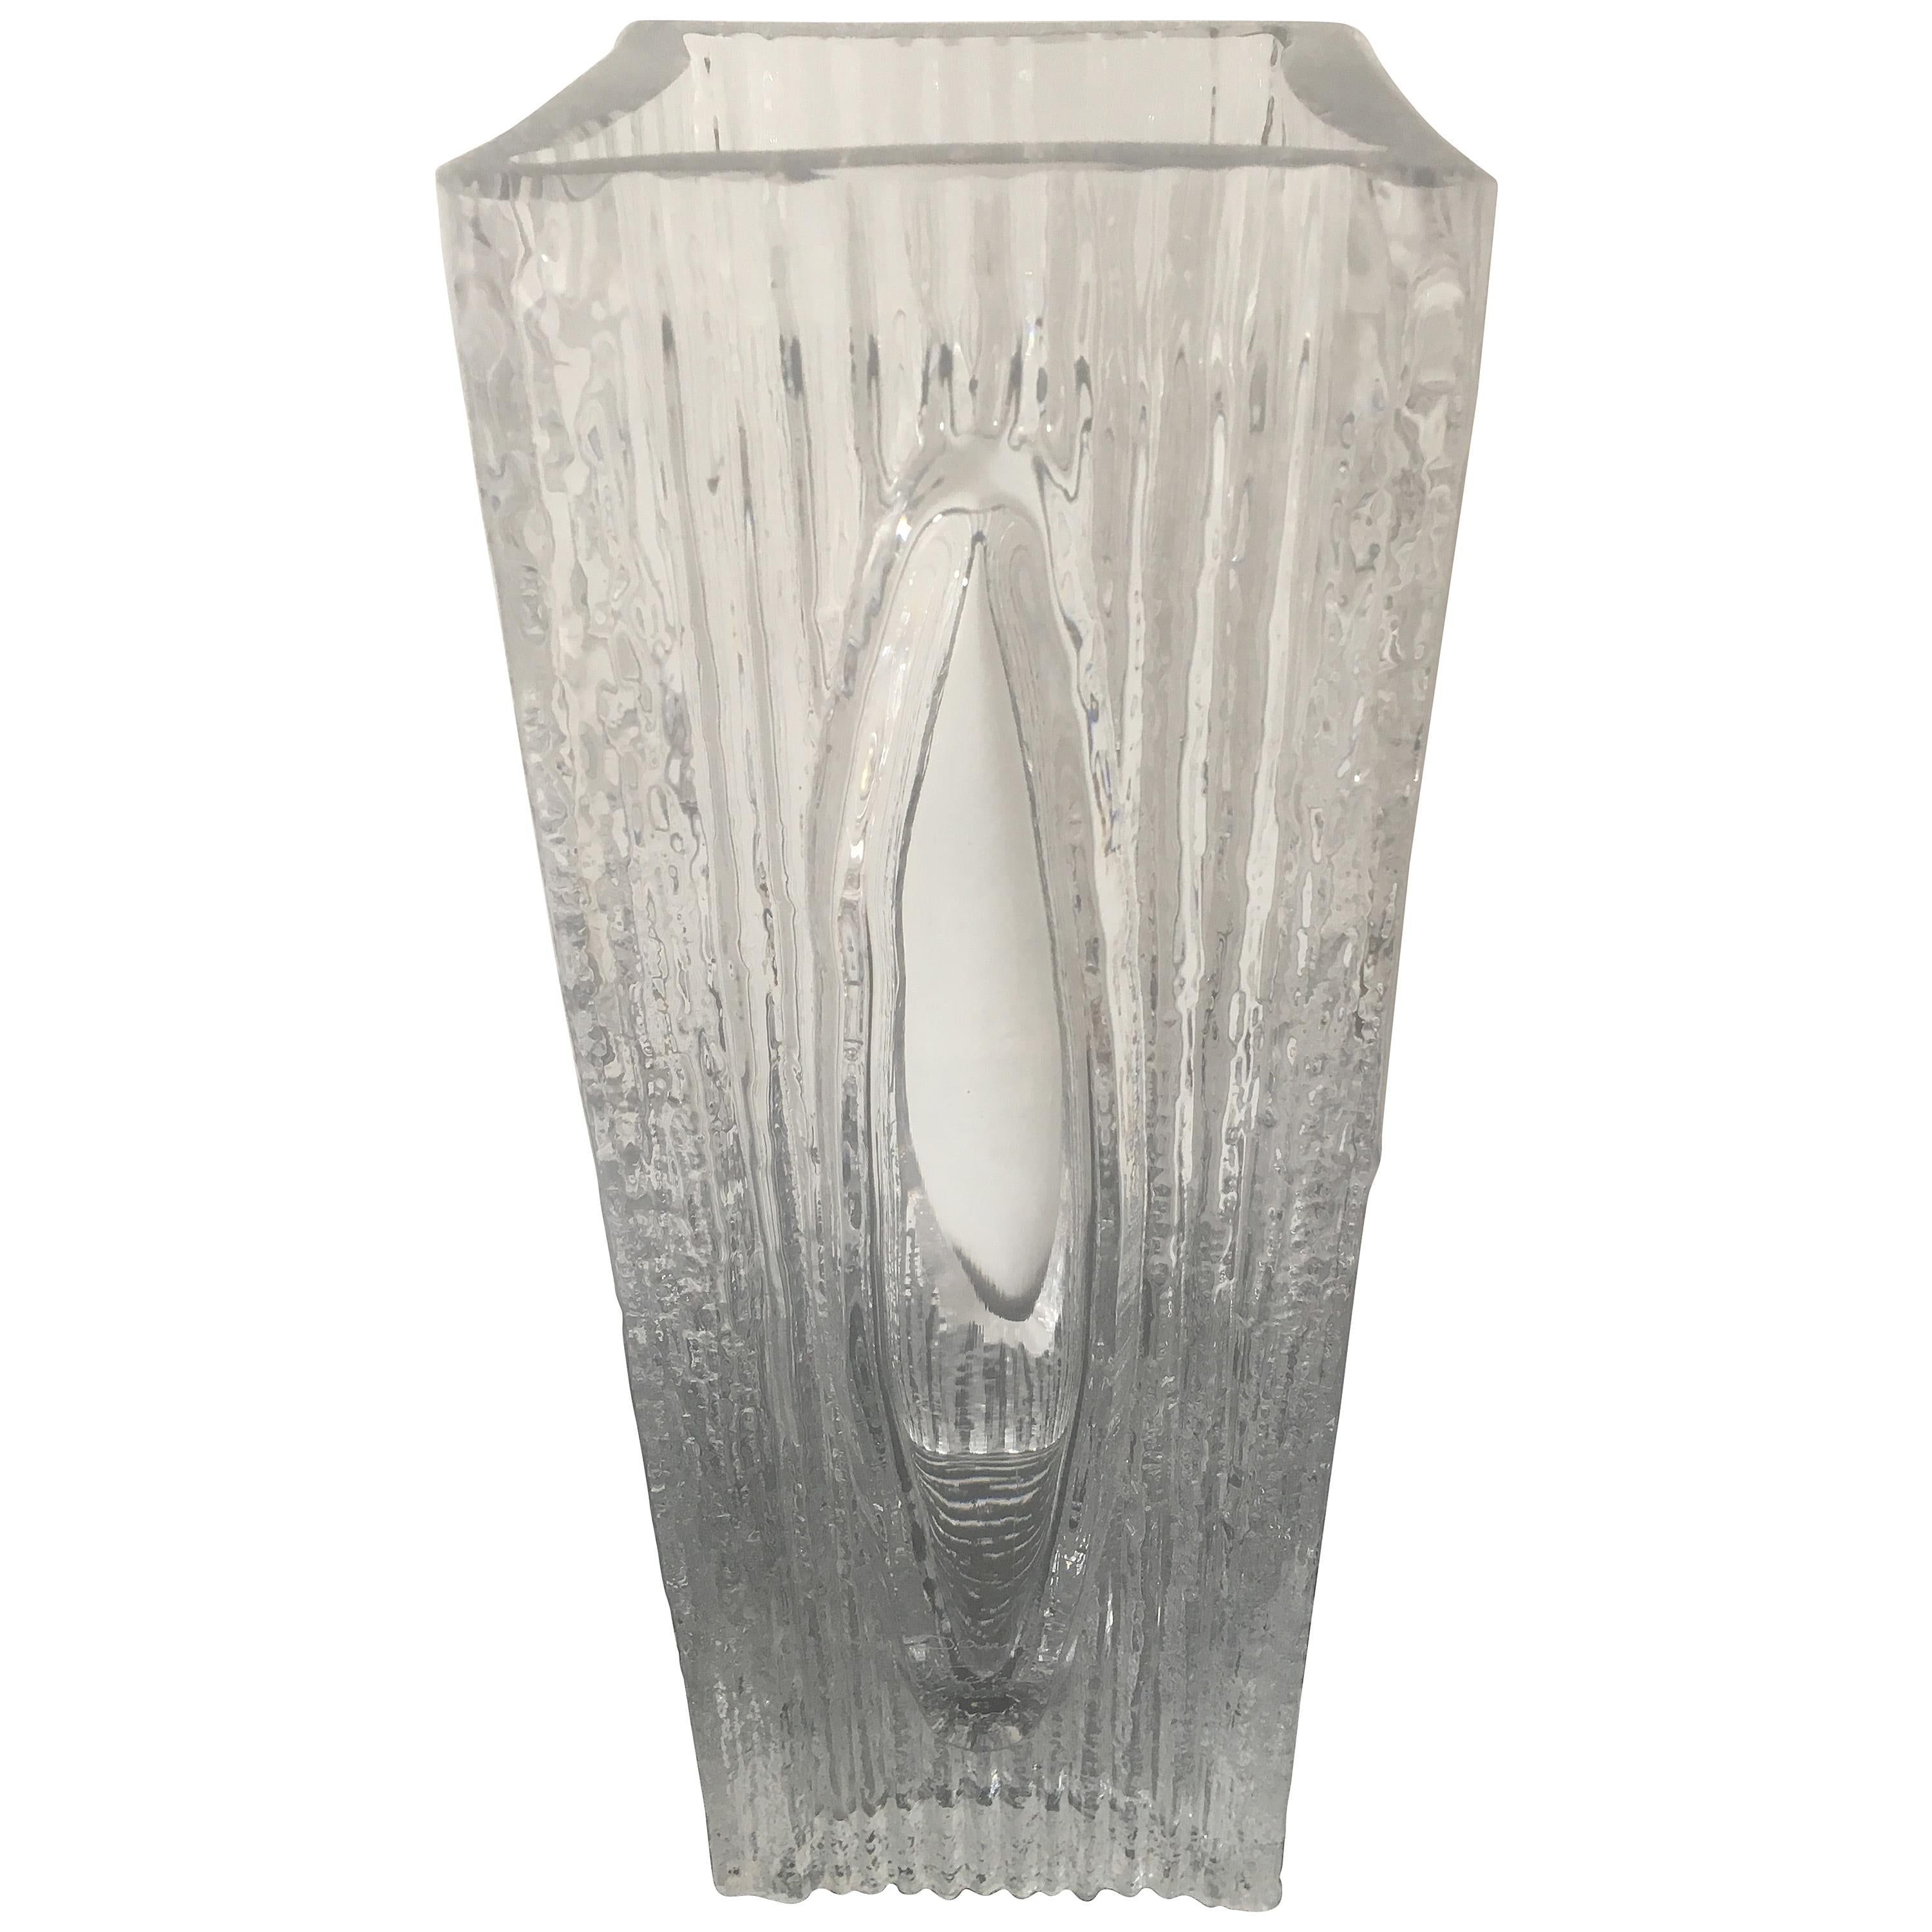 Daum France Signed Large Rectangular Art Glass Vase, French, 1970s For Sale